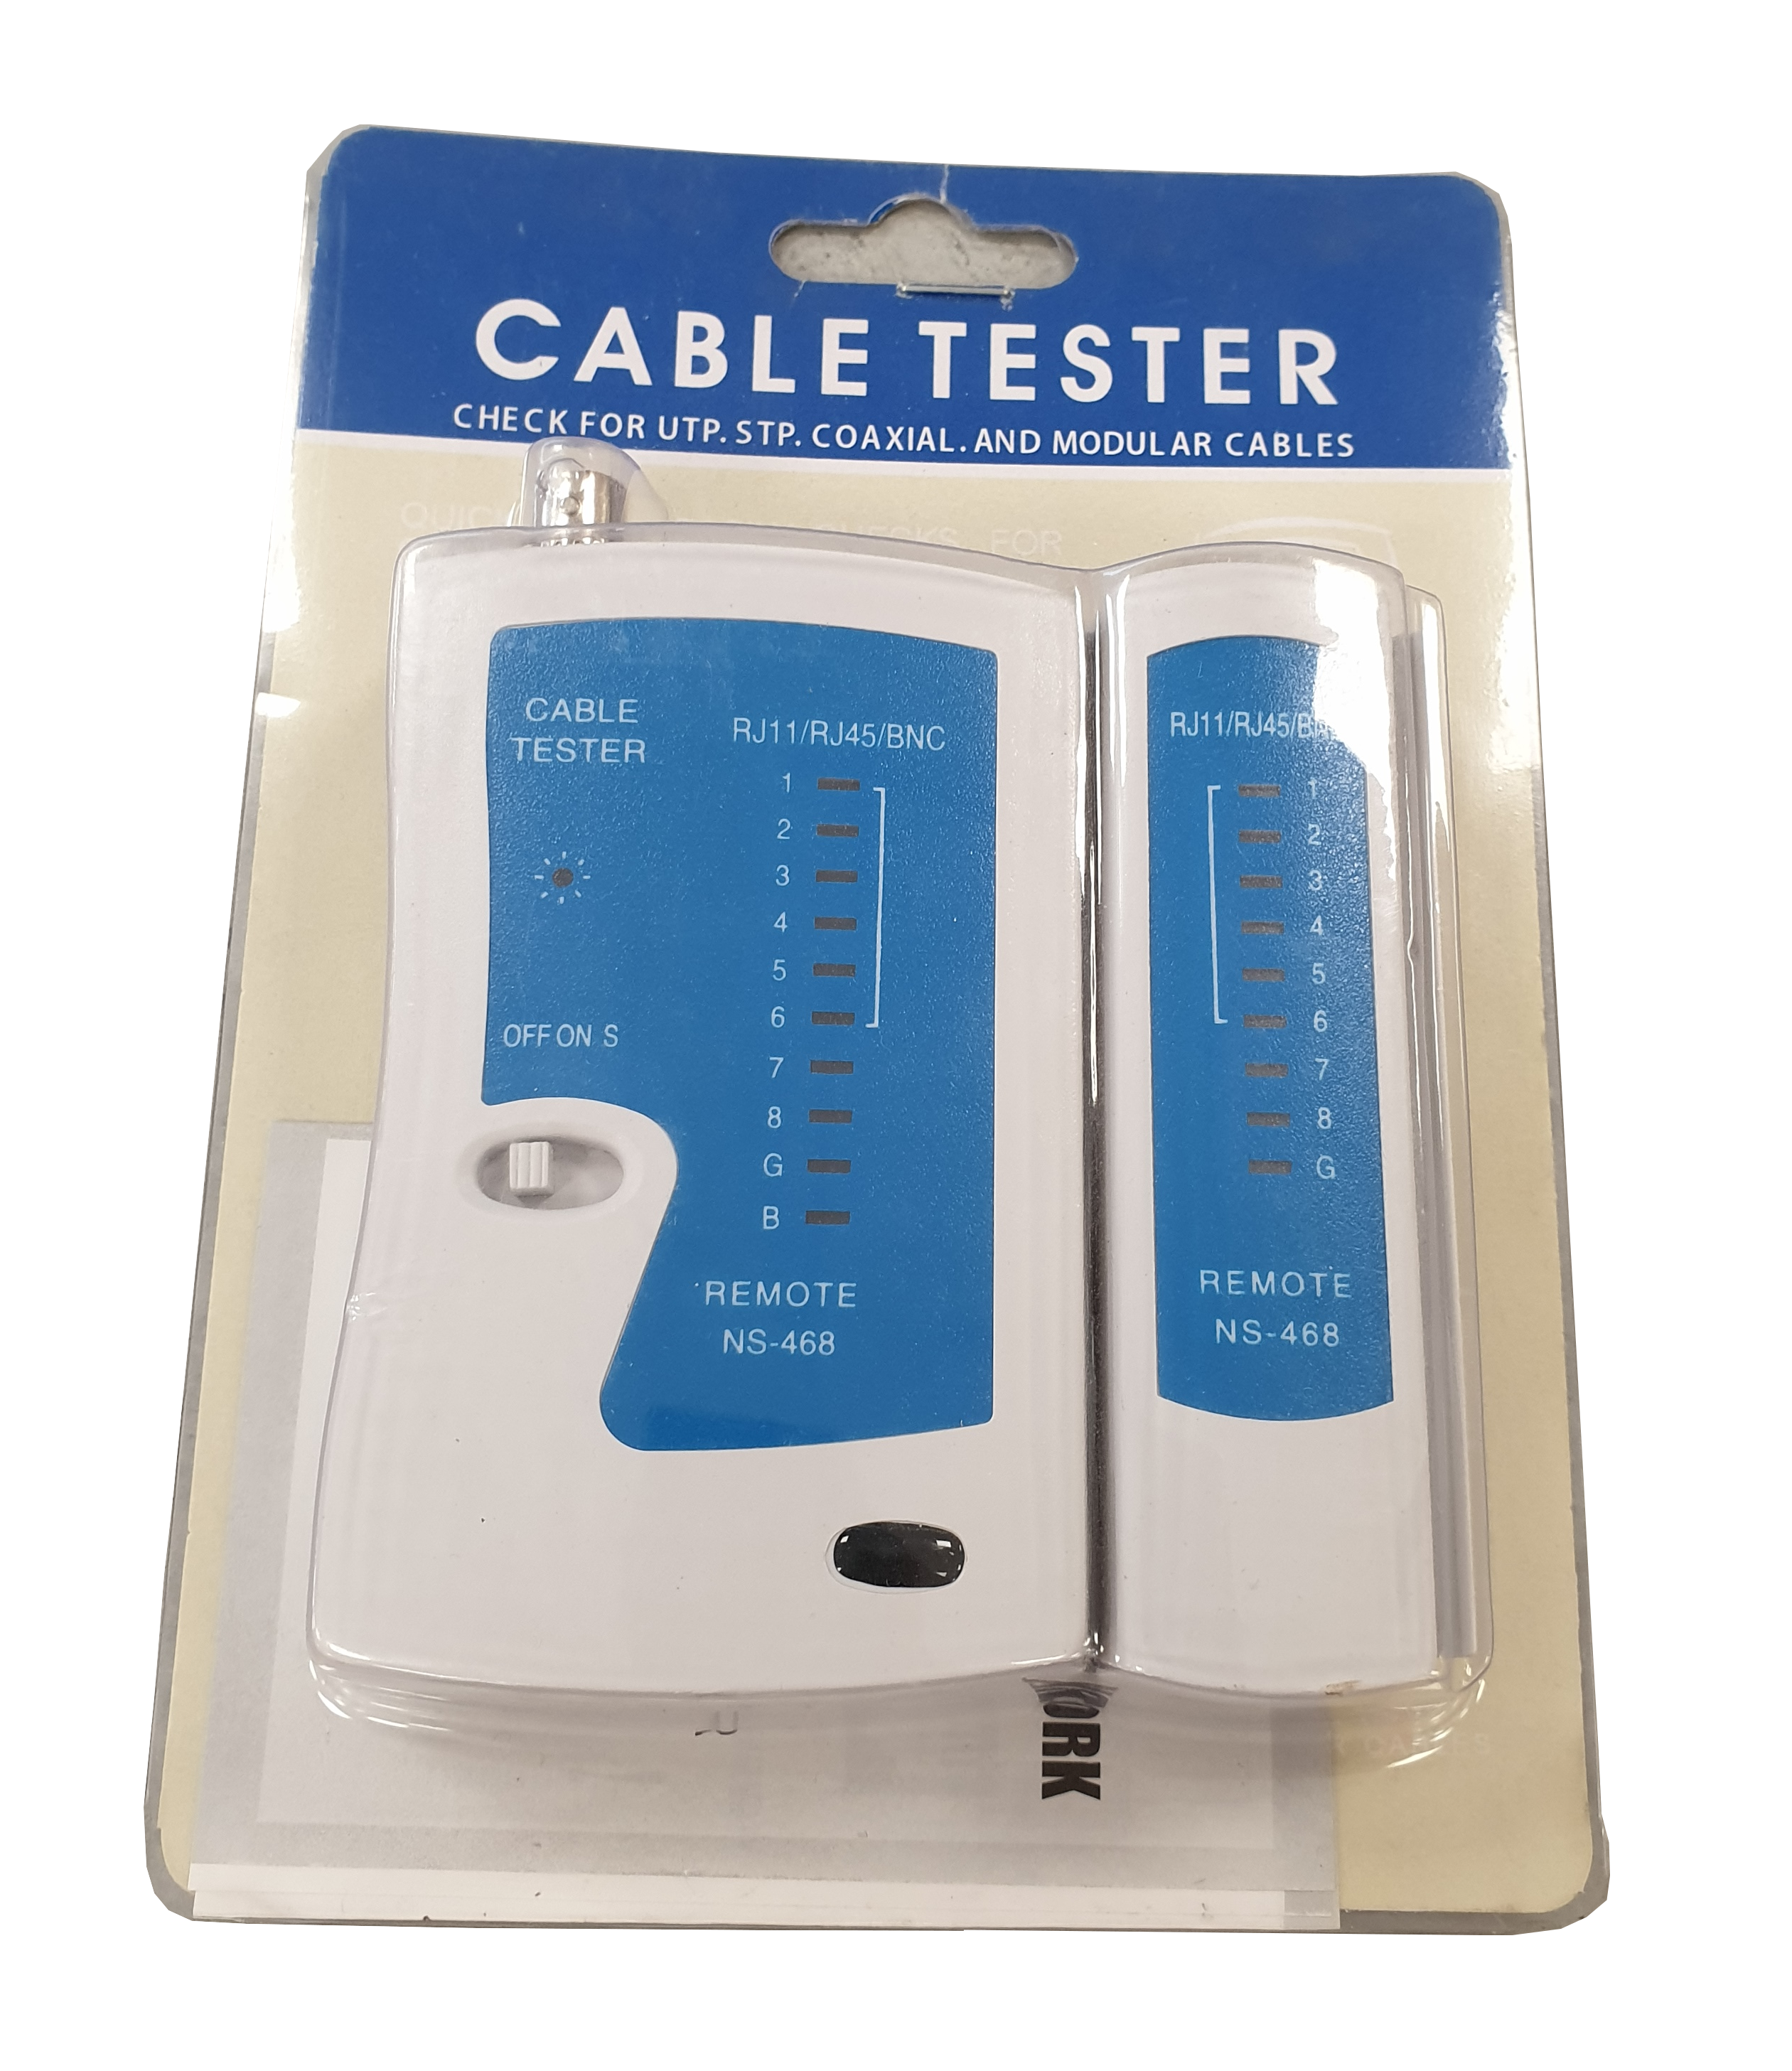  Tester za kablove (RJ45/RJ11/USB/BNC) 